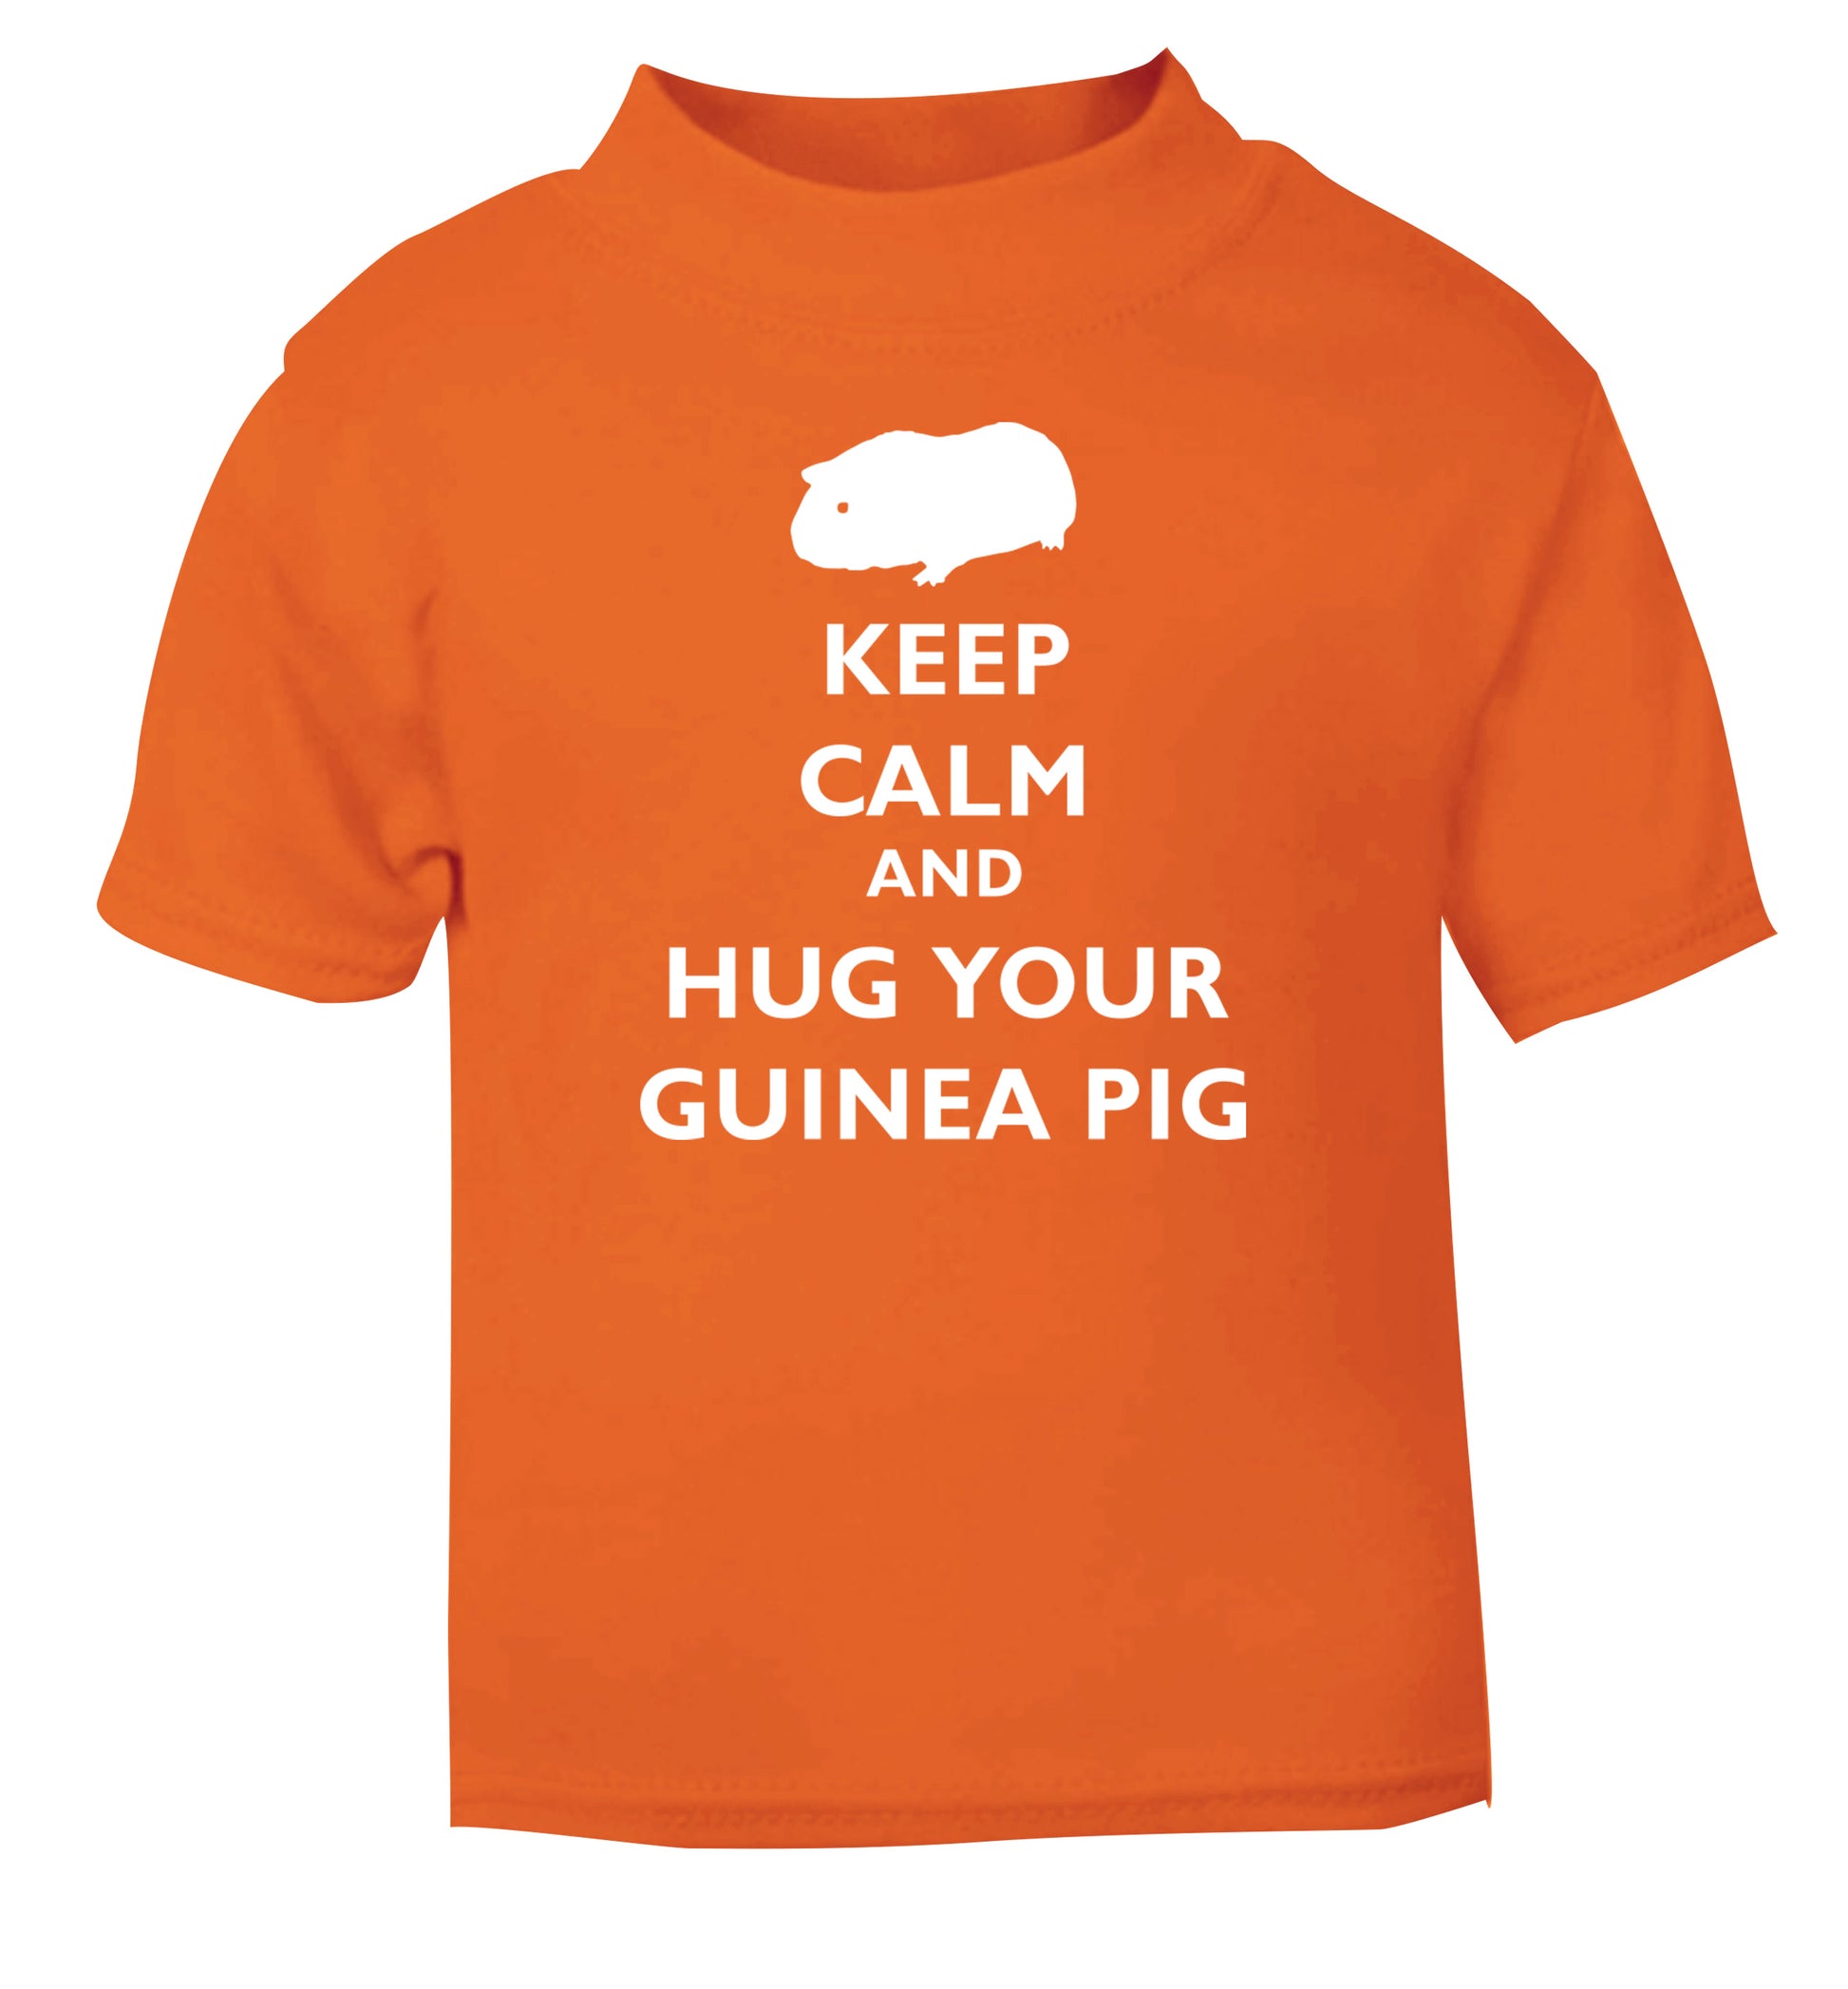 Keep calm and hug your guineapig orange Baby Toddler Tshirt 2 Years